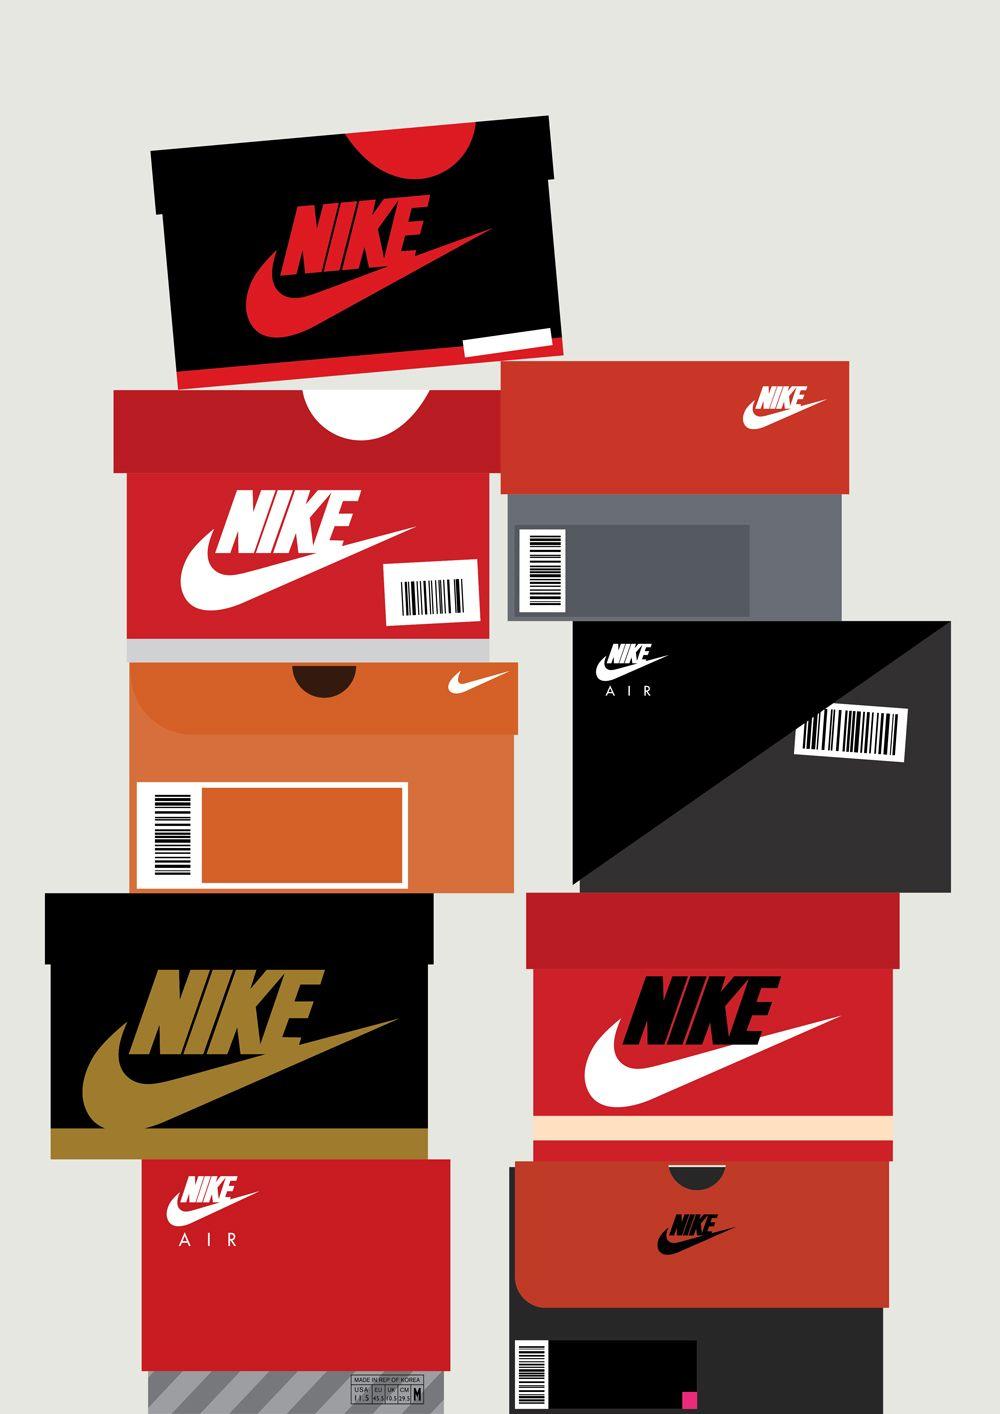 Sneaker iPhone Wallpapers - Top Free 